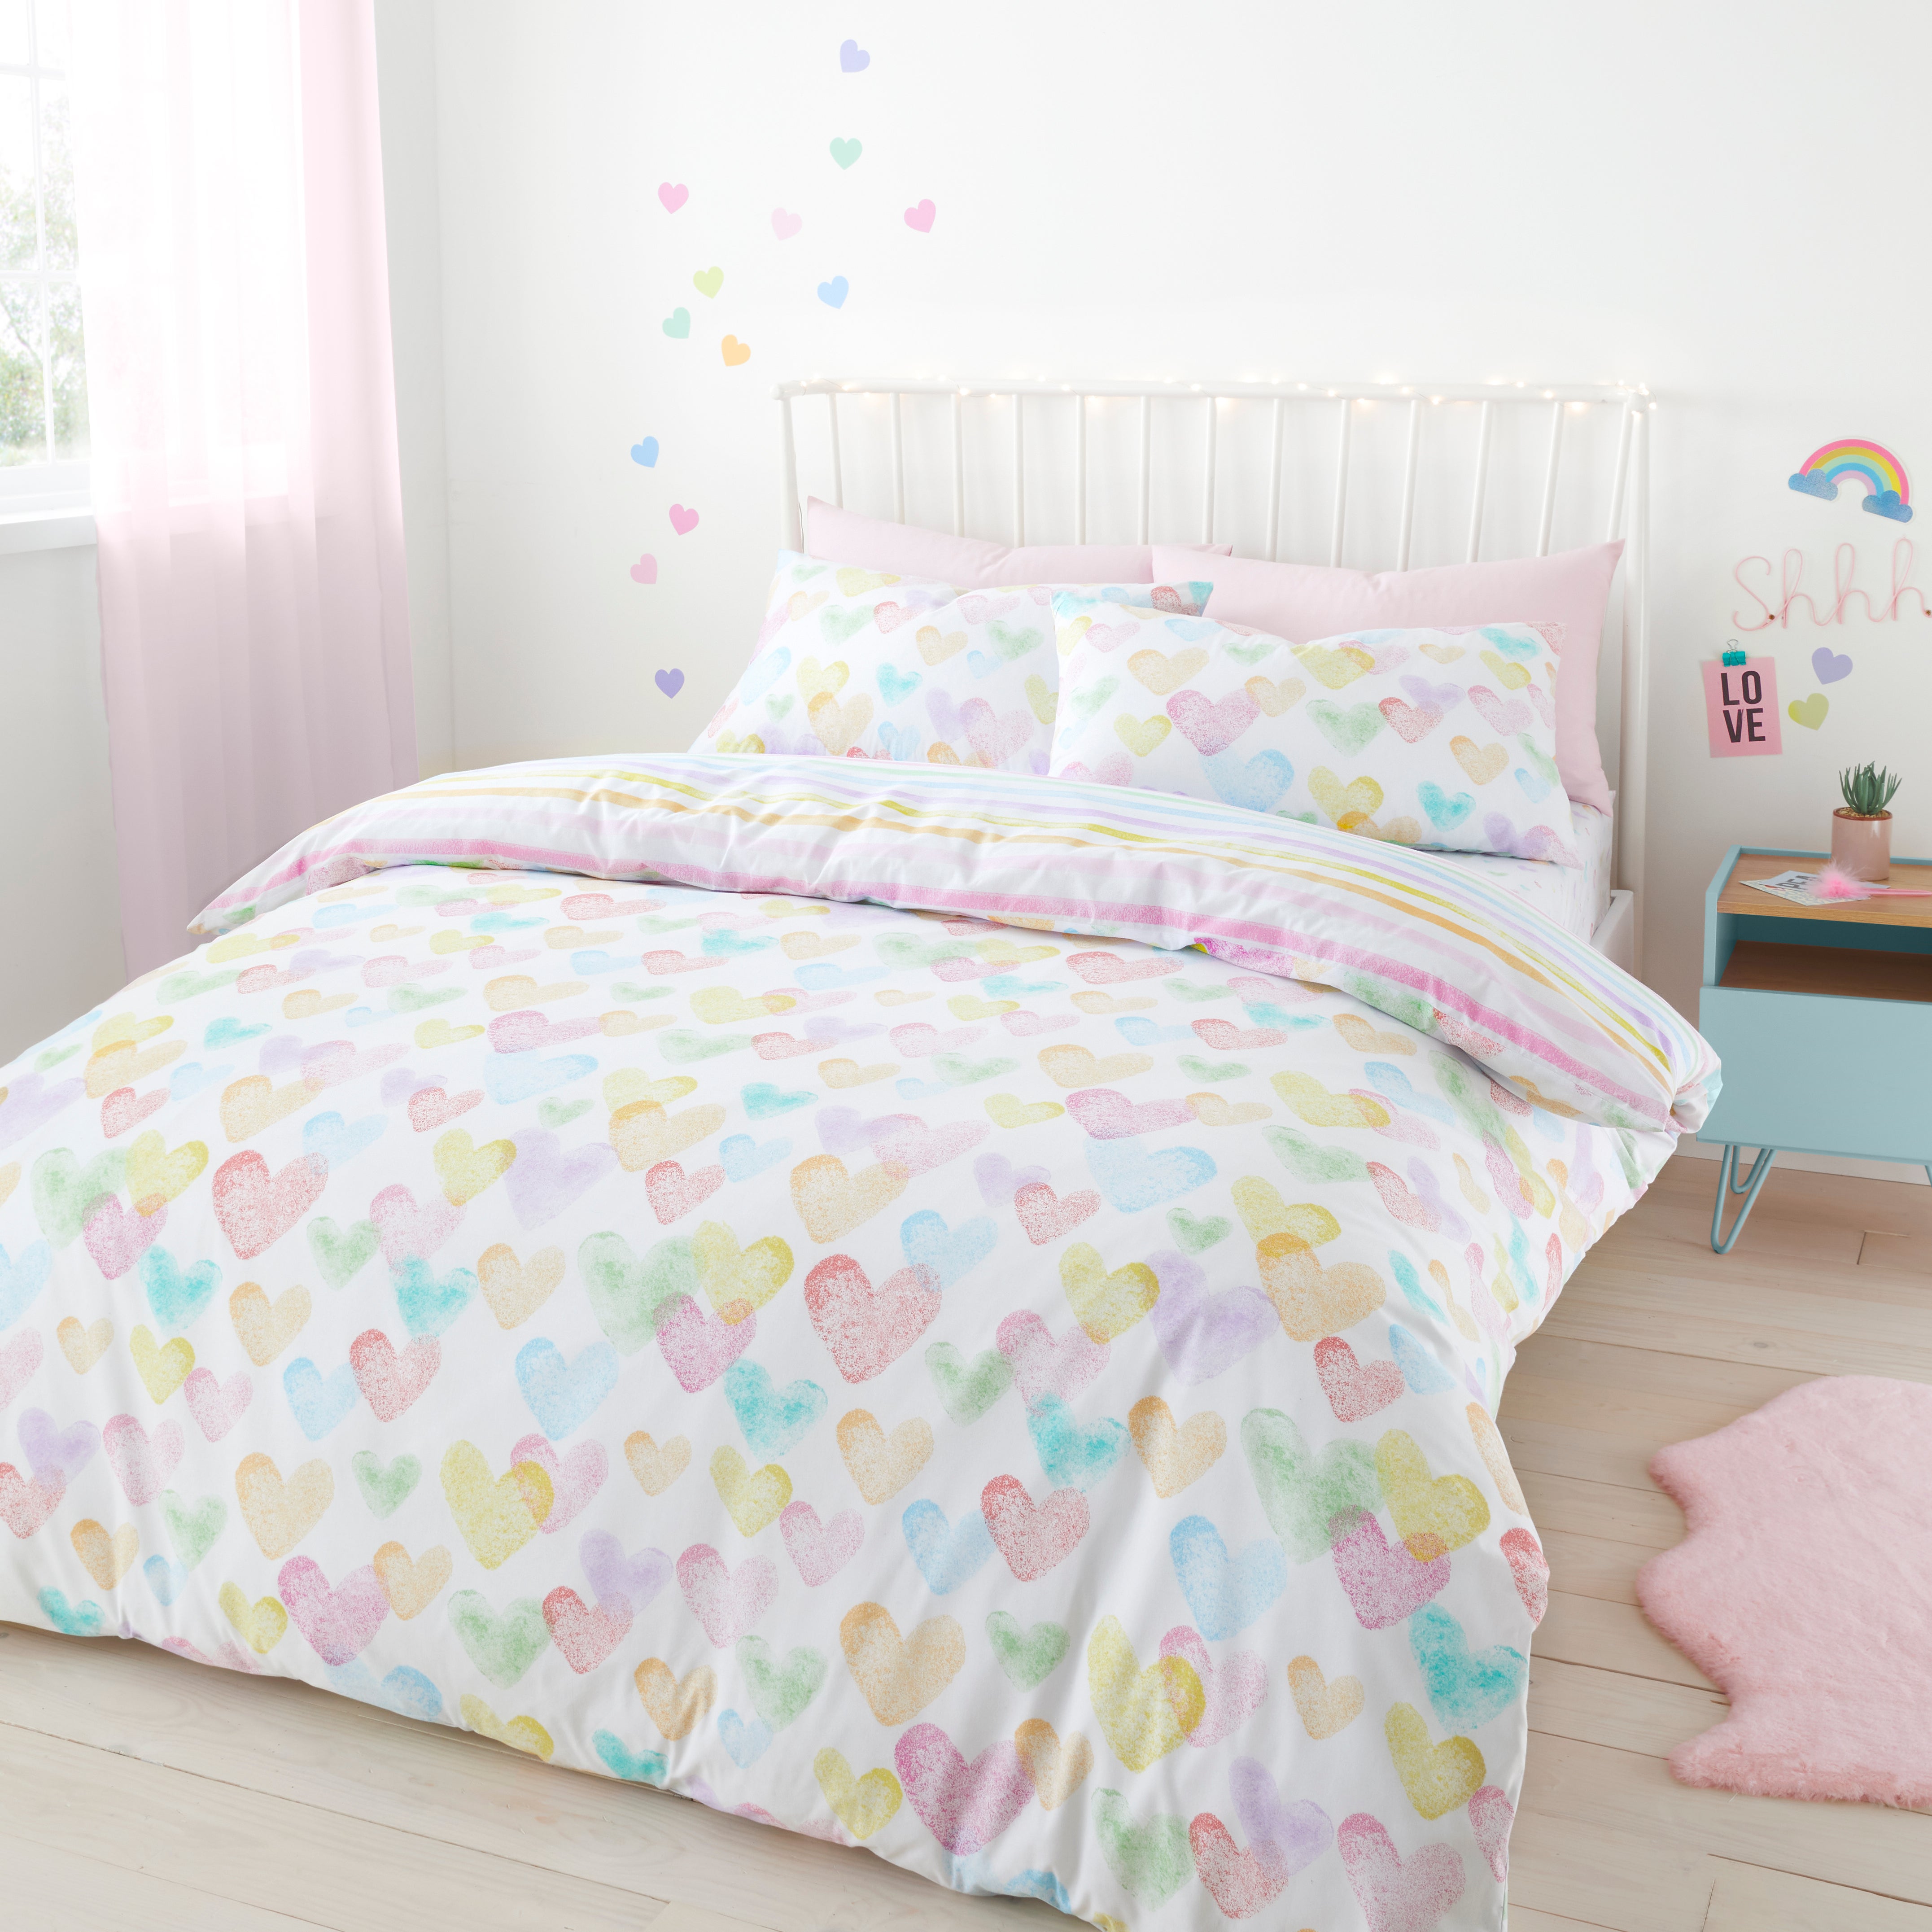 Rainbow Hearts Duvet Cover and Pillowcase Set